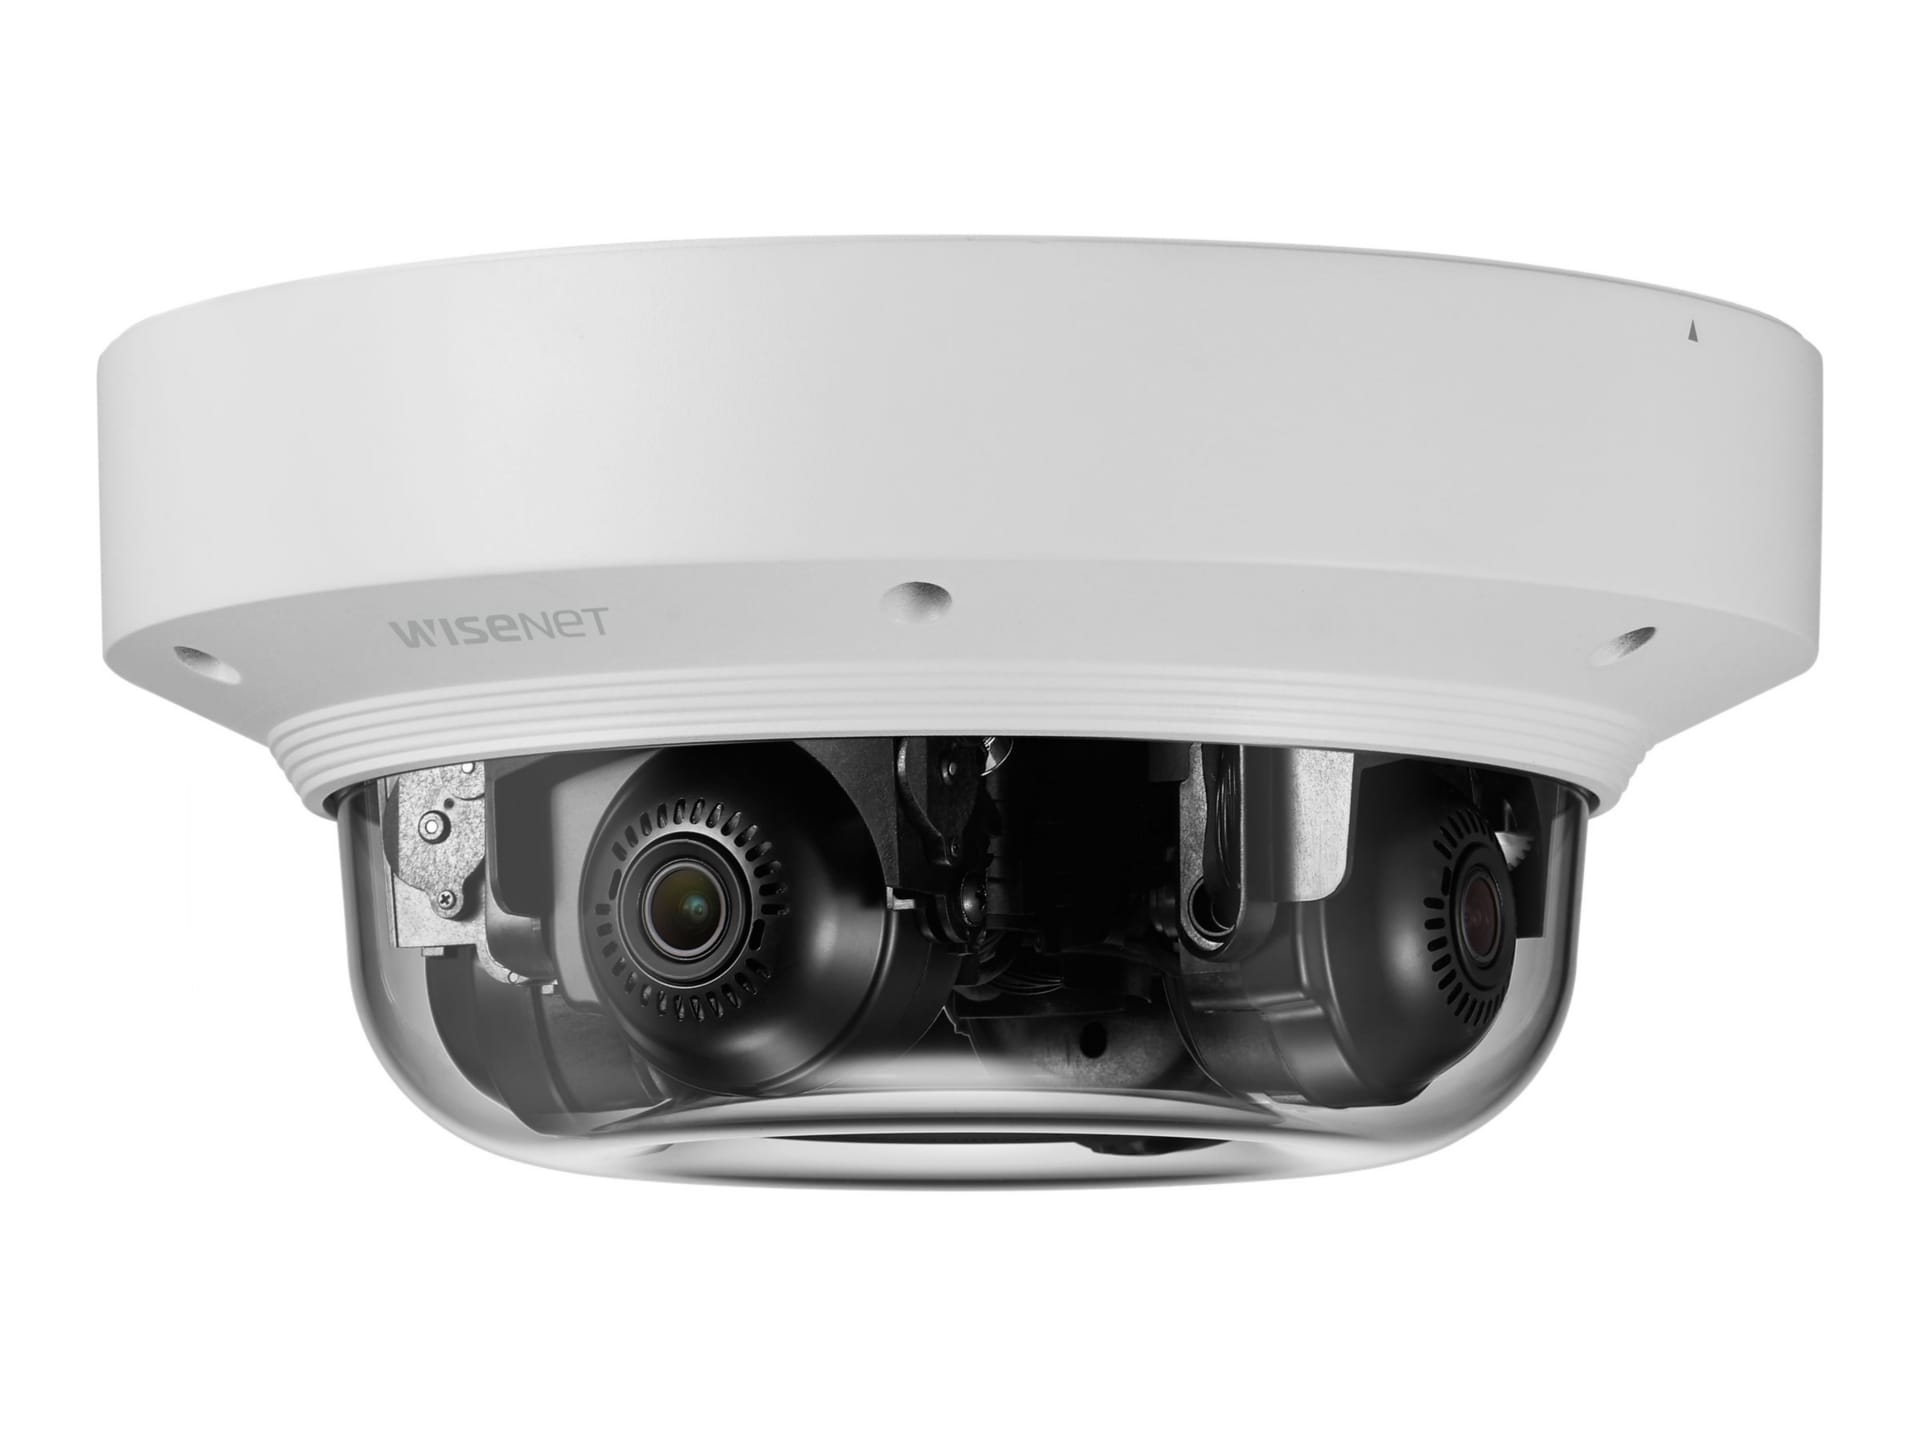 Hanwha Techwin WiseNet P PNM-9084QZ1 - network surveillance camera - dome